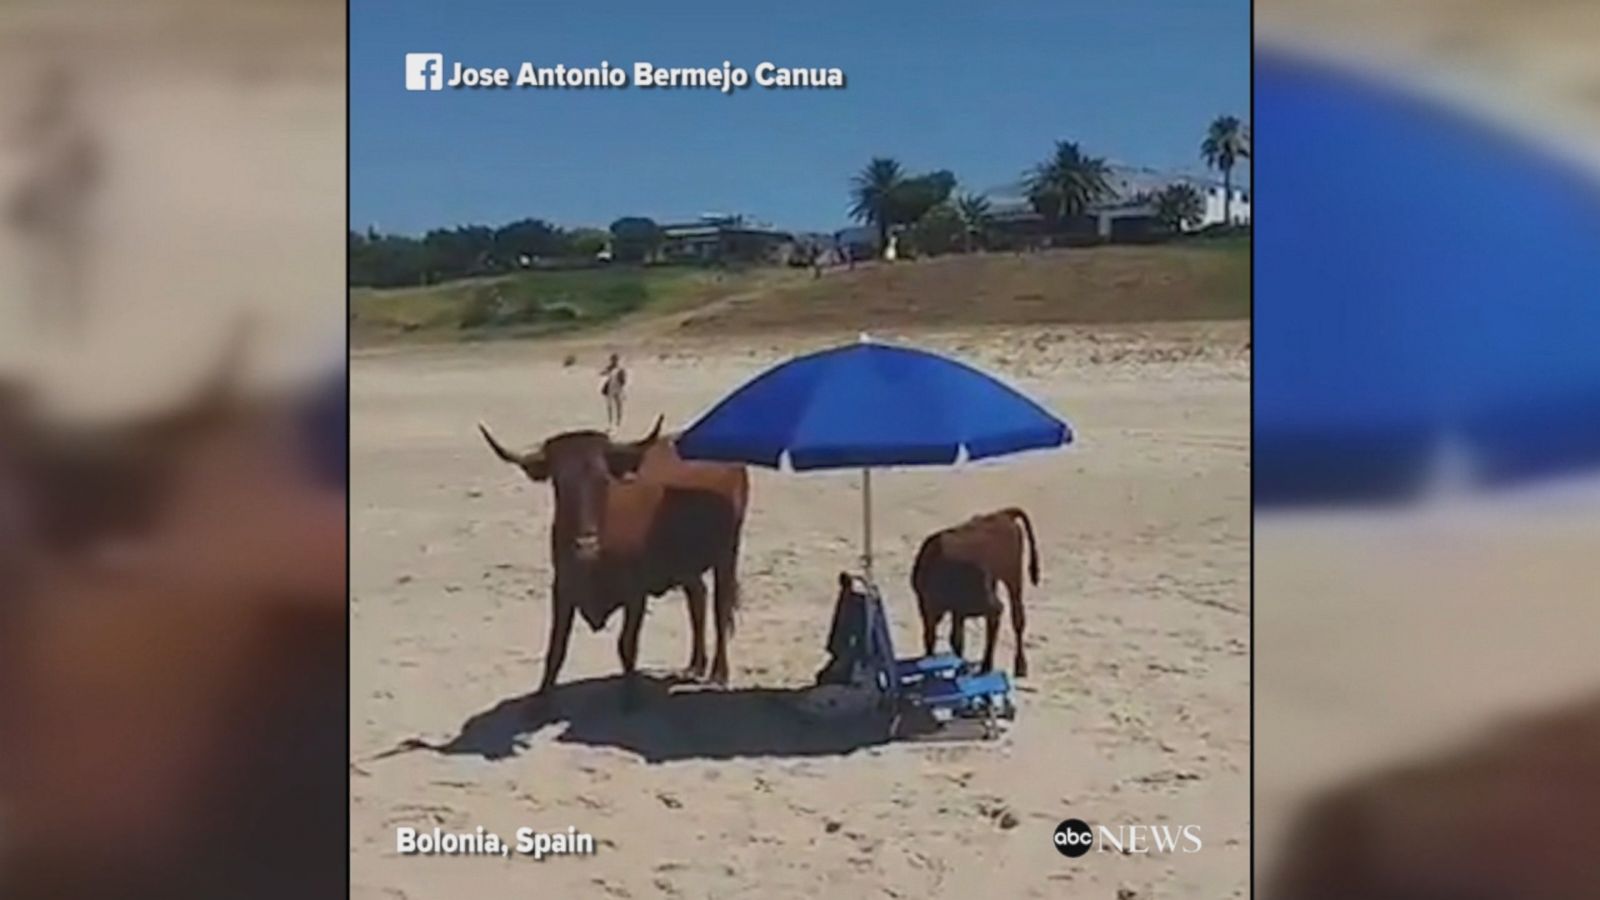 Cow, calf enjoy beach day in Spain - Good Morning America